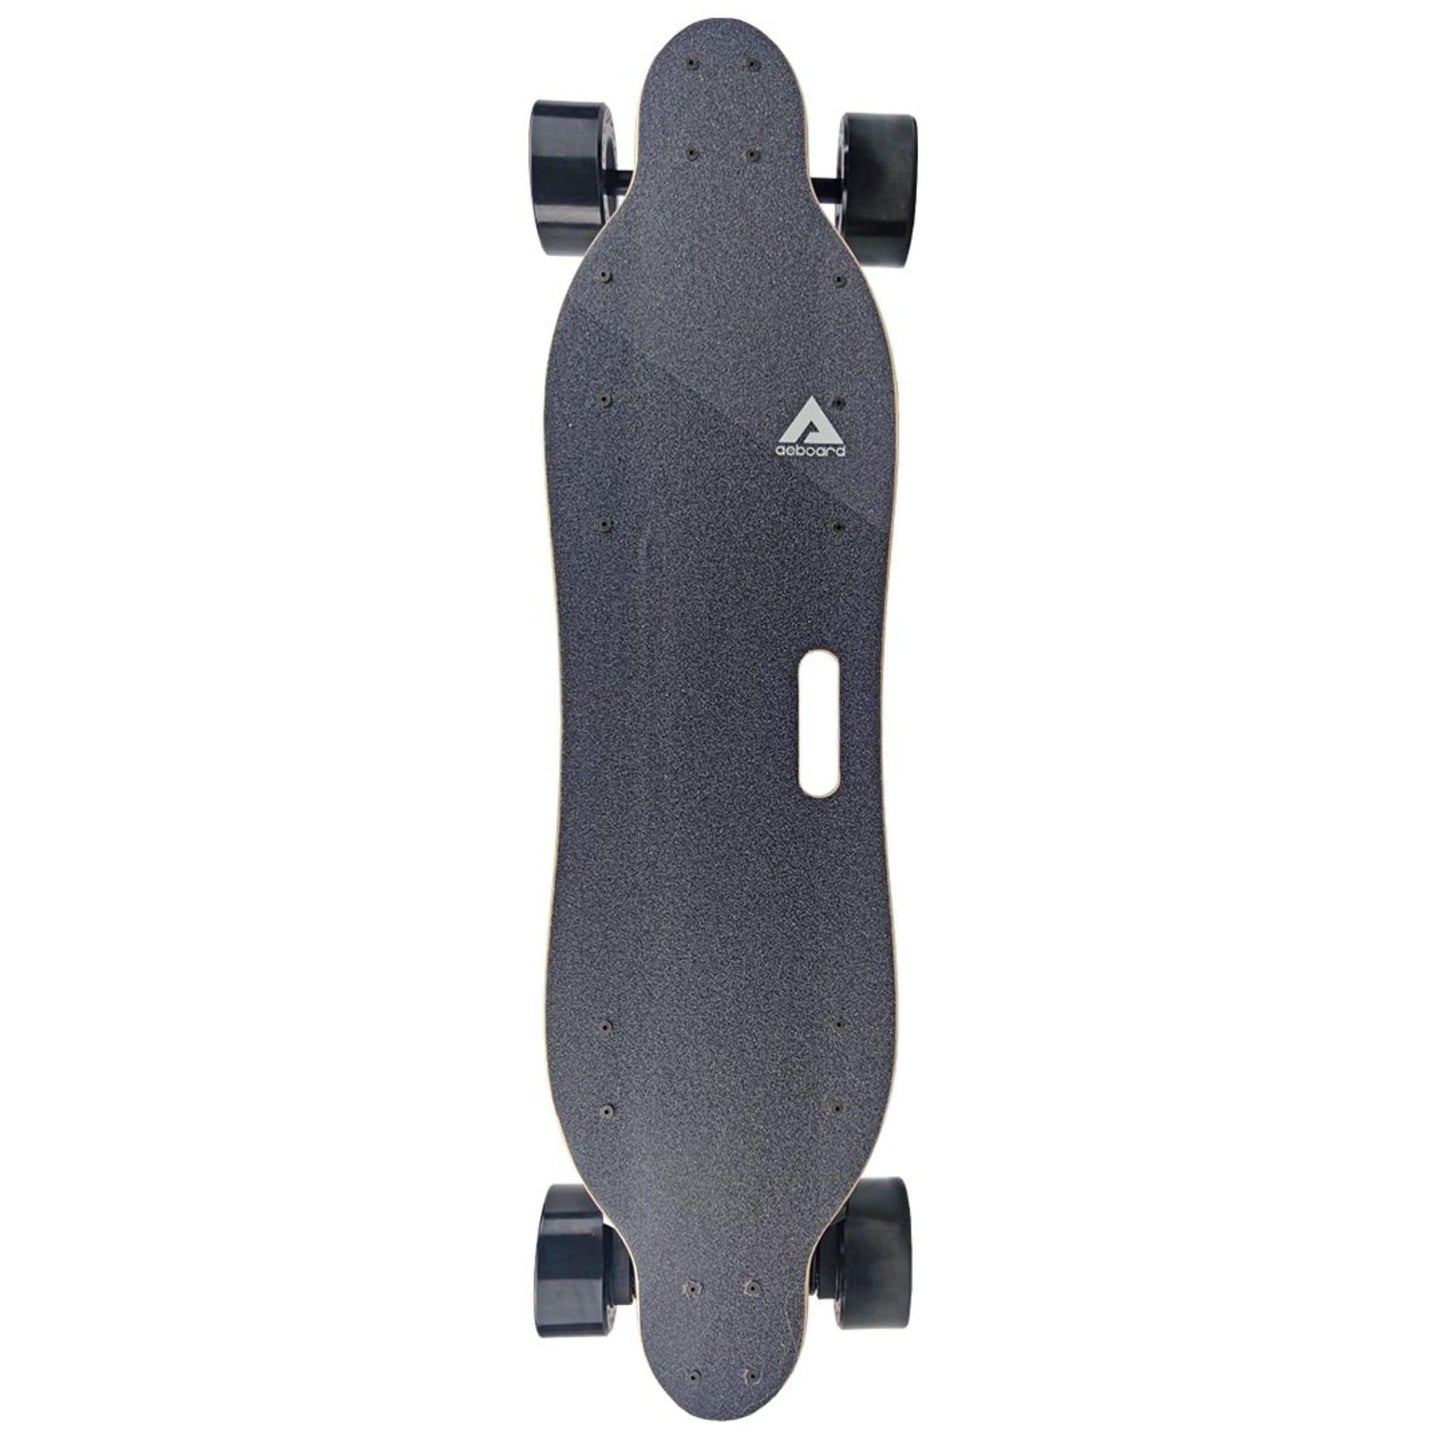 AEBoard Hornet Electric Skateboard